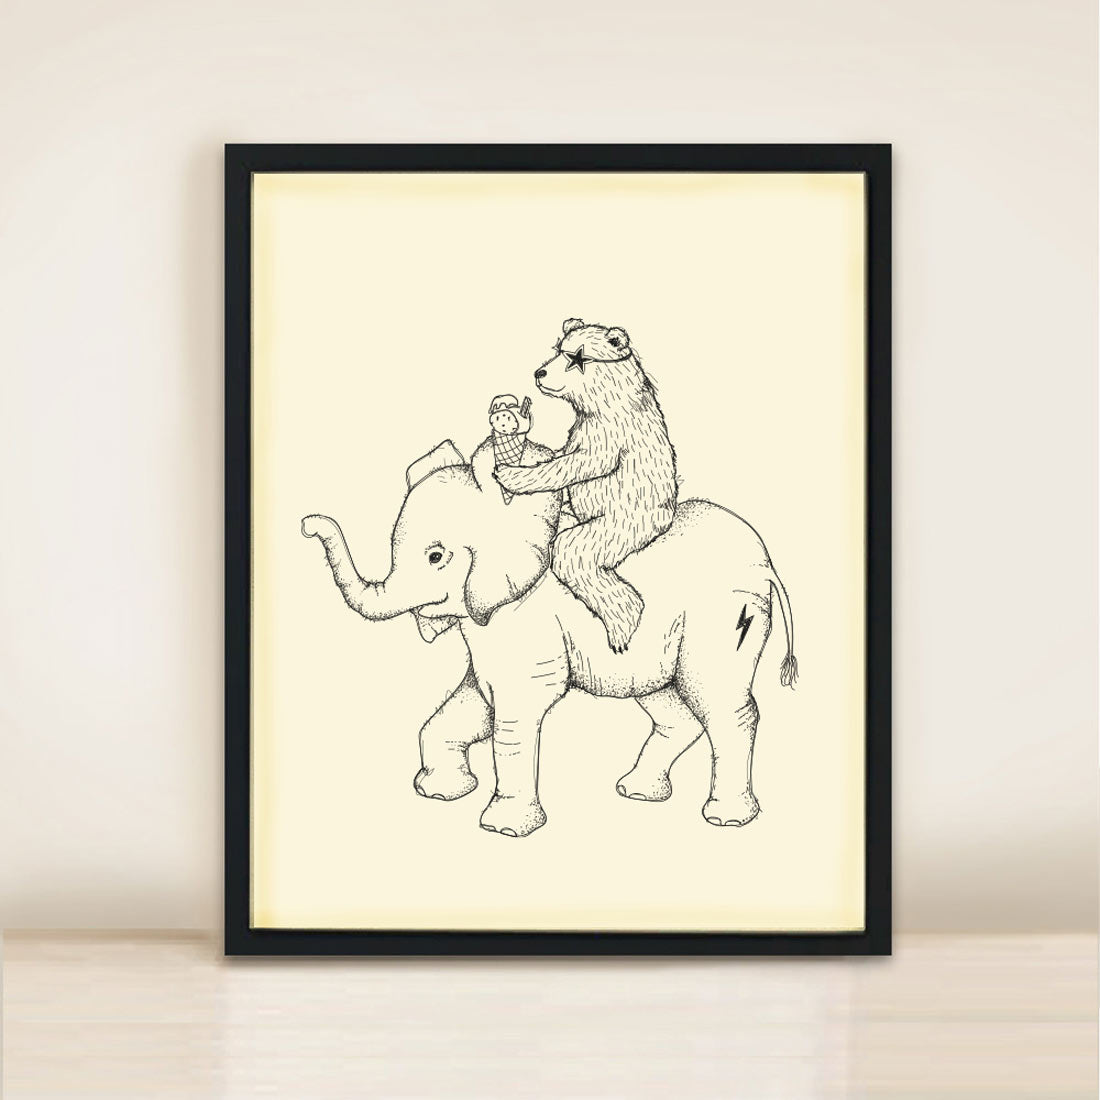 Elephant and Bear cub Poster Print A3